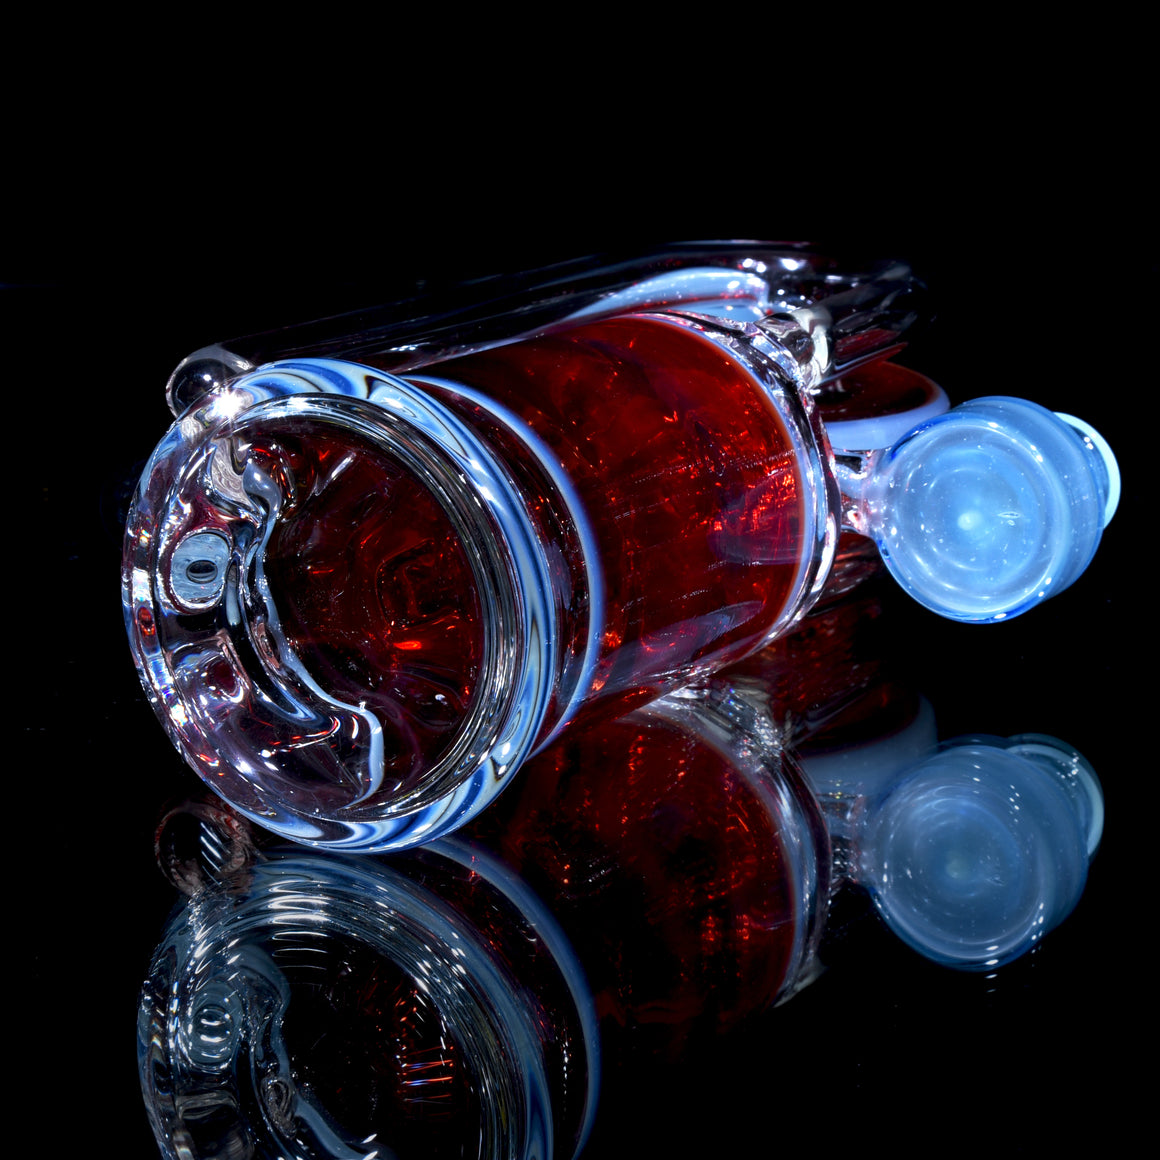 Double Vertical Bottle Recycler - Blood Orange/Blue Lotus - 10mm Female